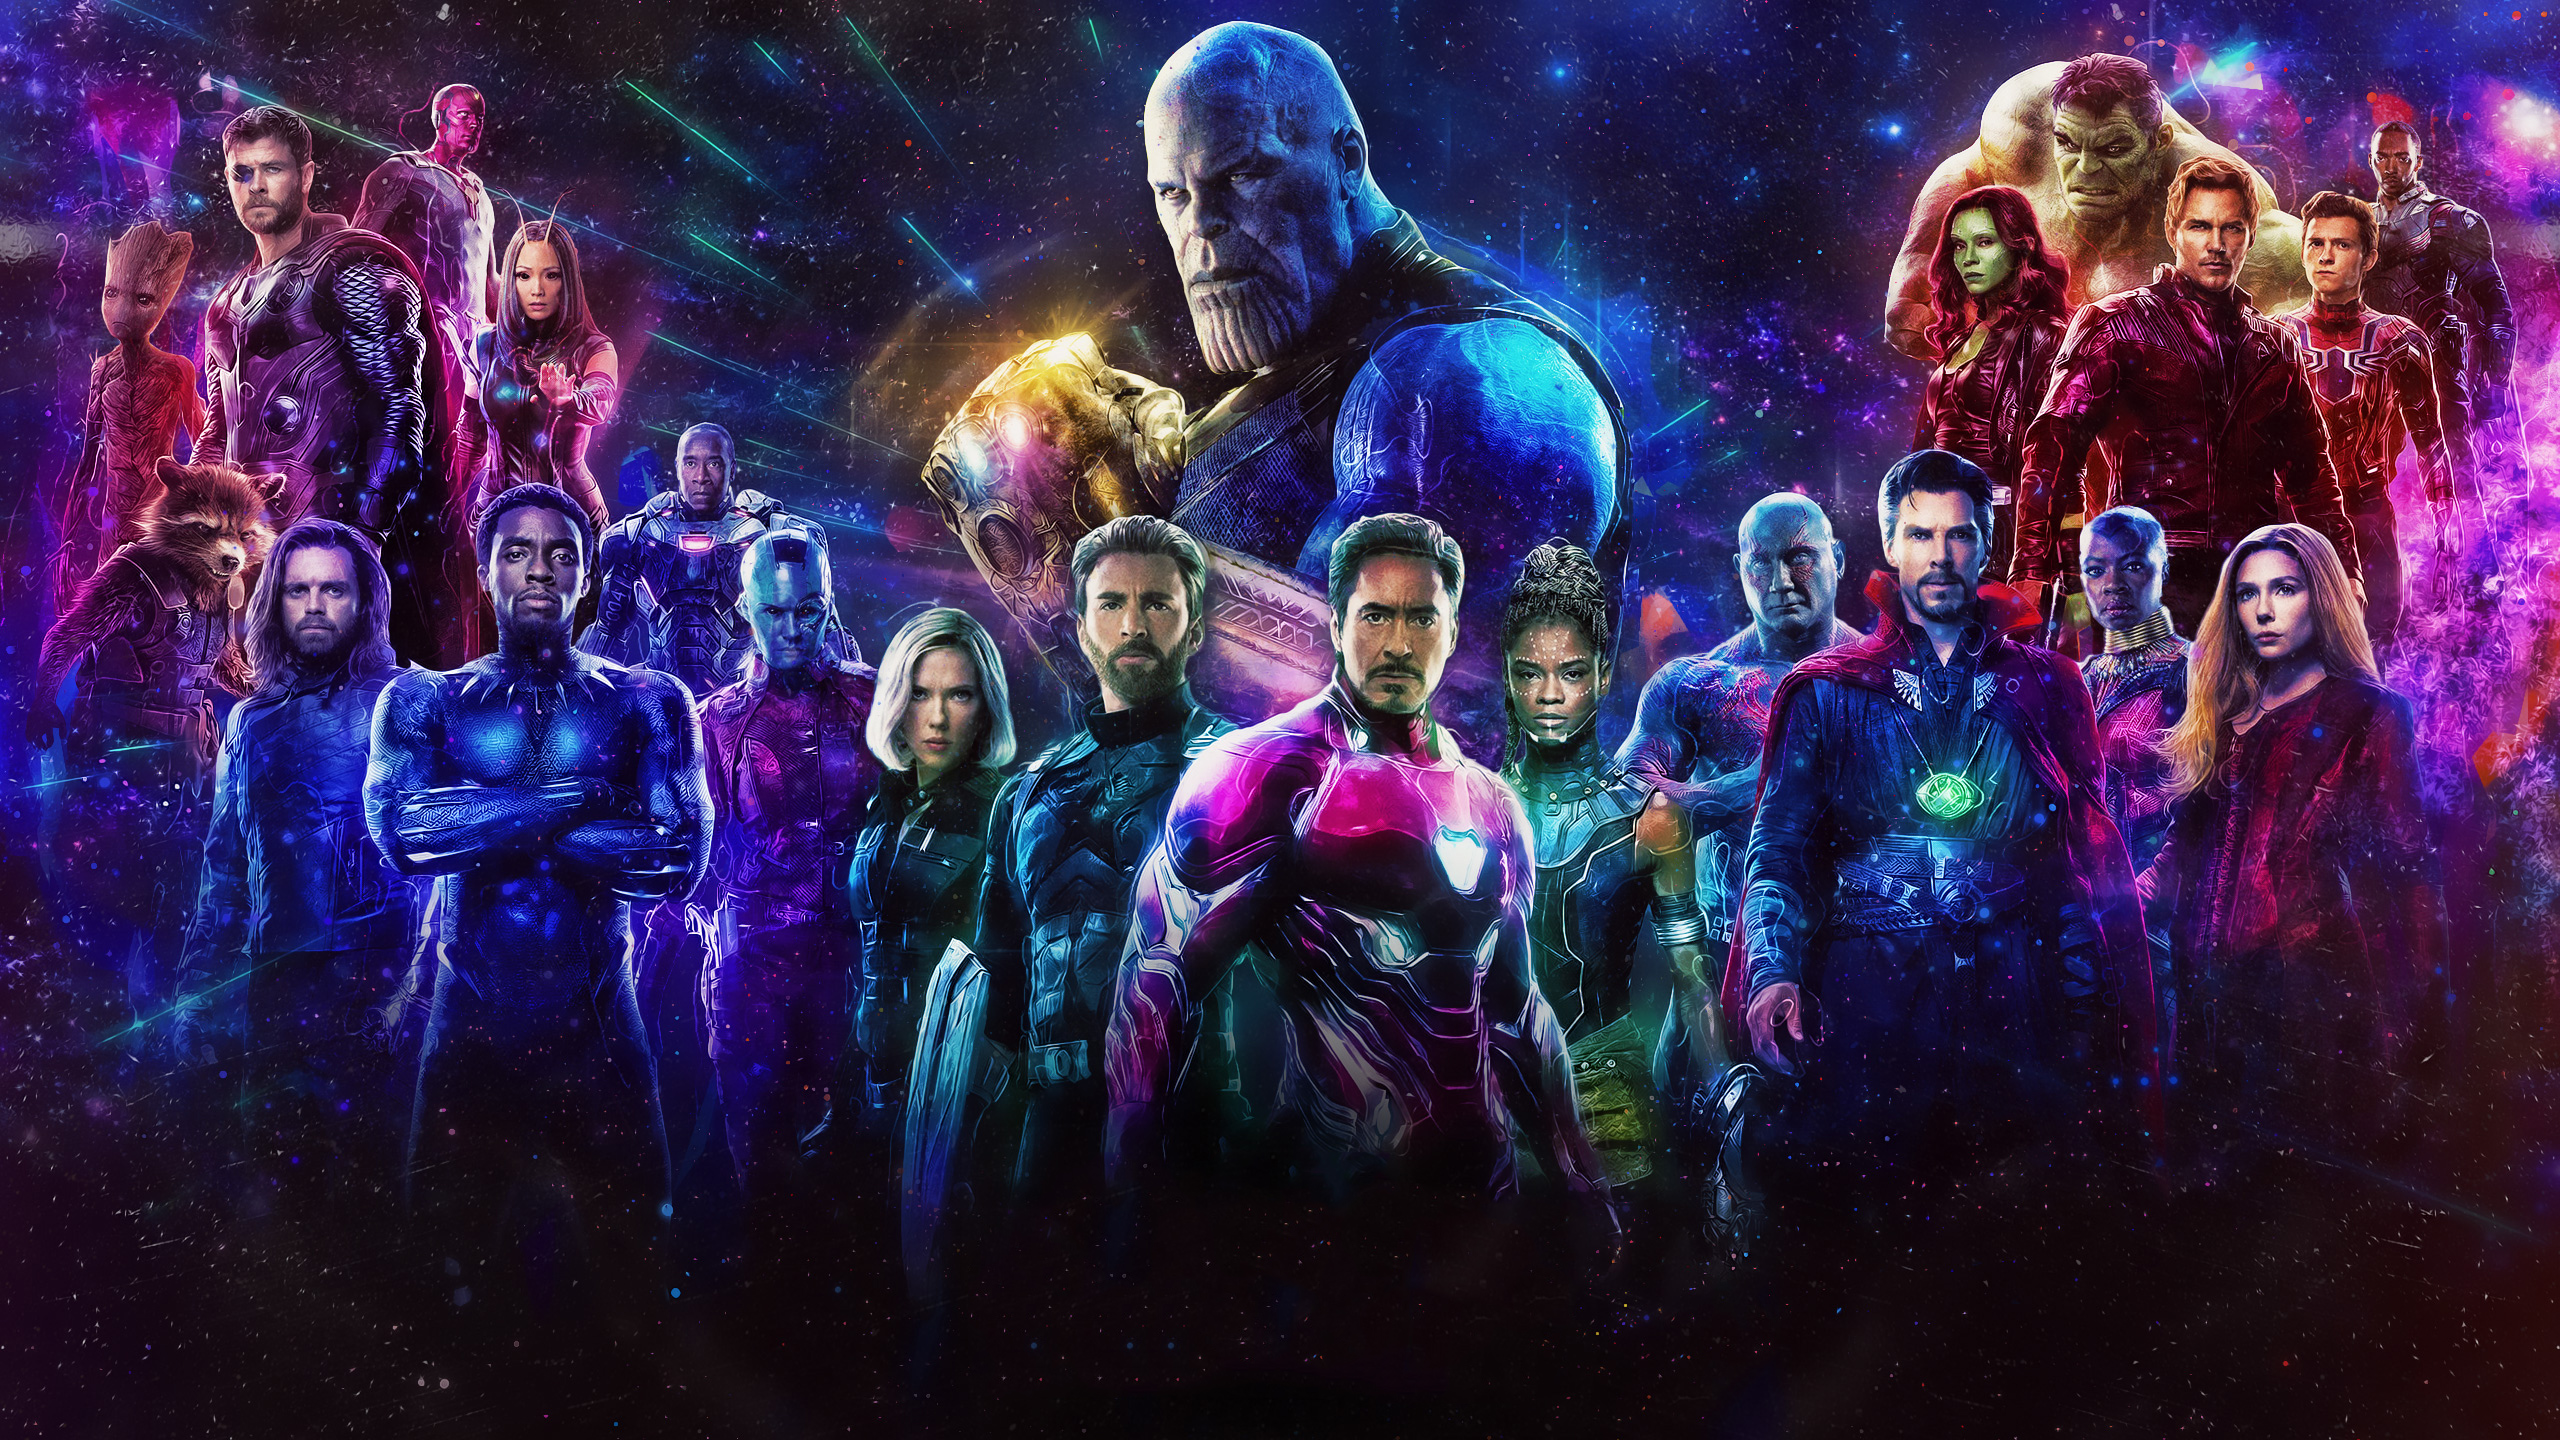 avenger infinity war full hd movie free download